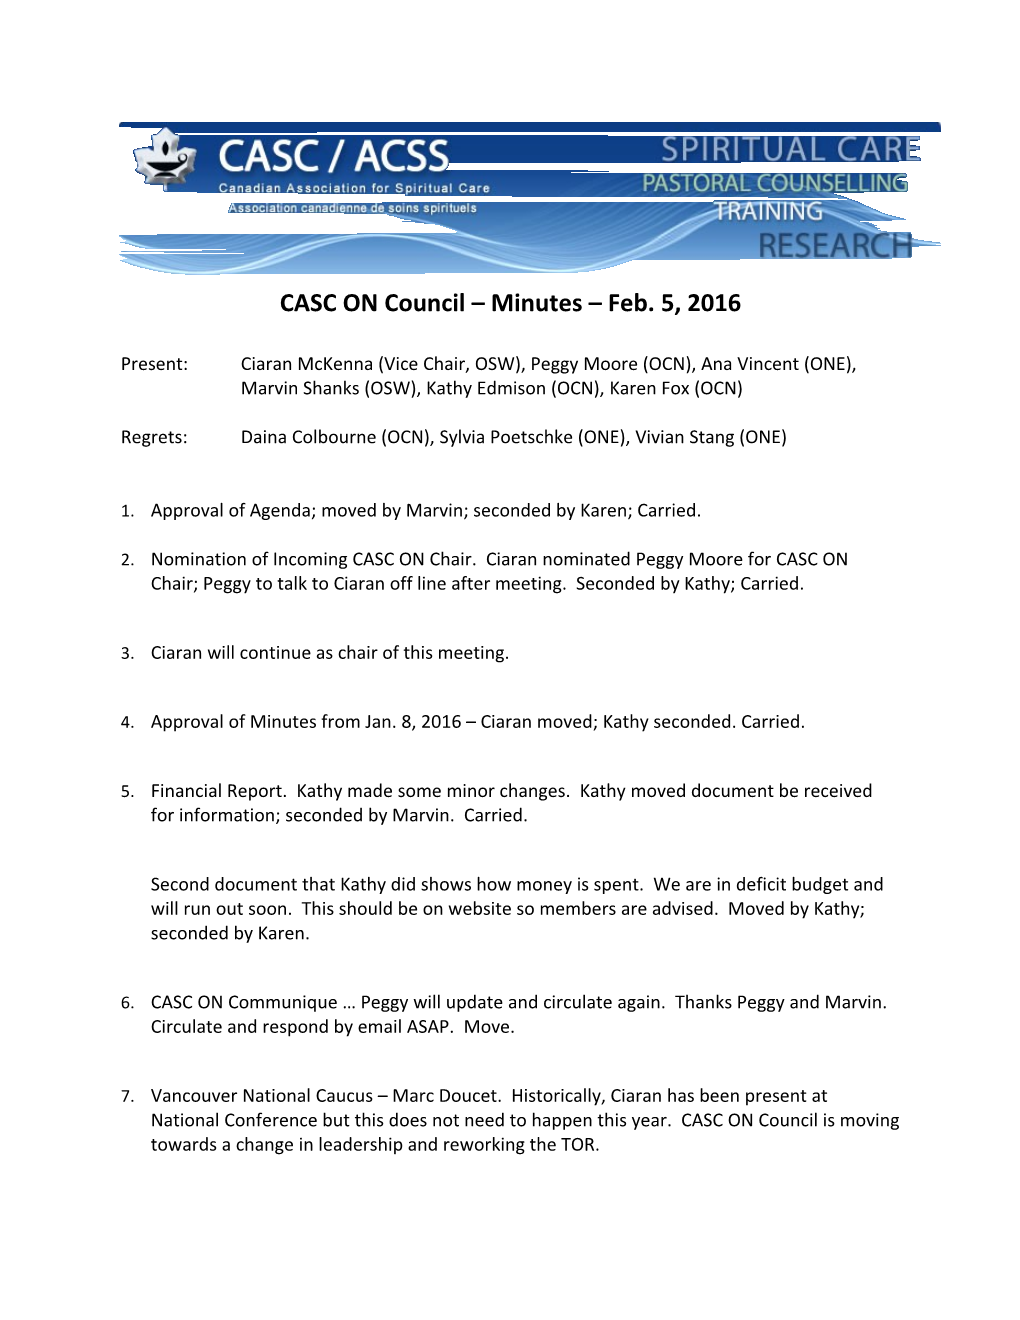 CASC on Council Minutes Feb. 5, 2016